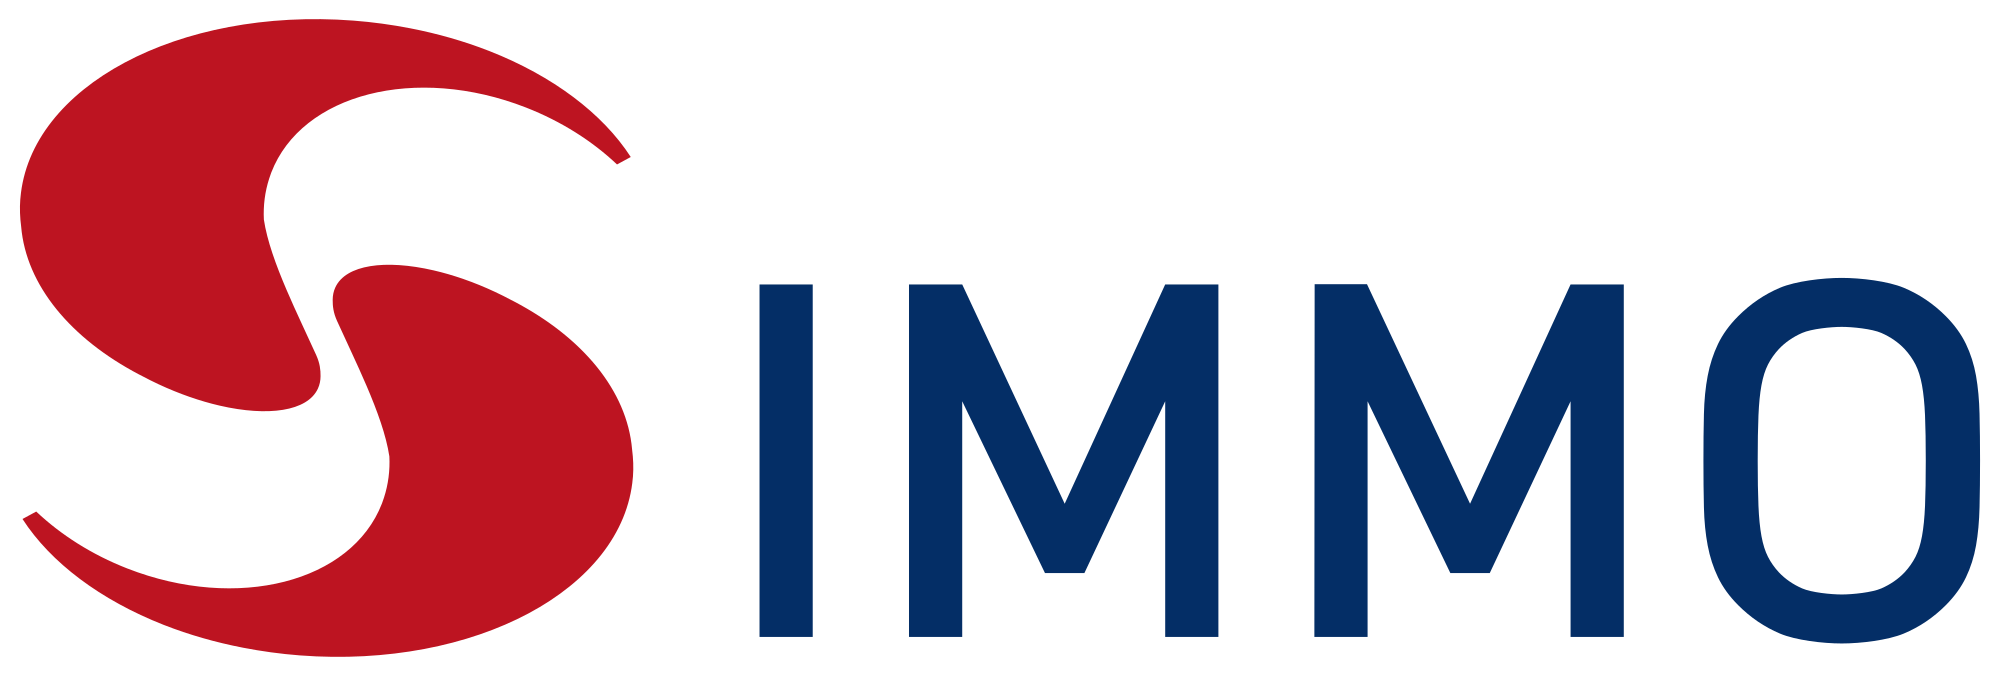 2000px-S_IMMO_logo.svg